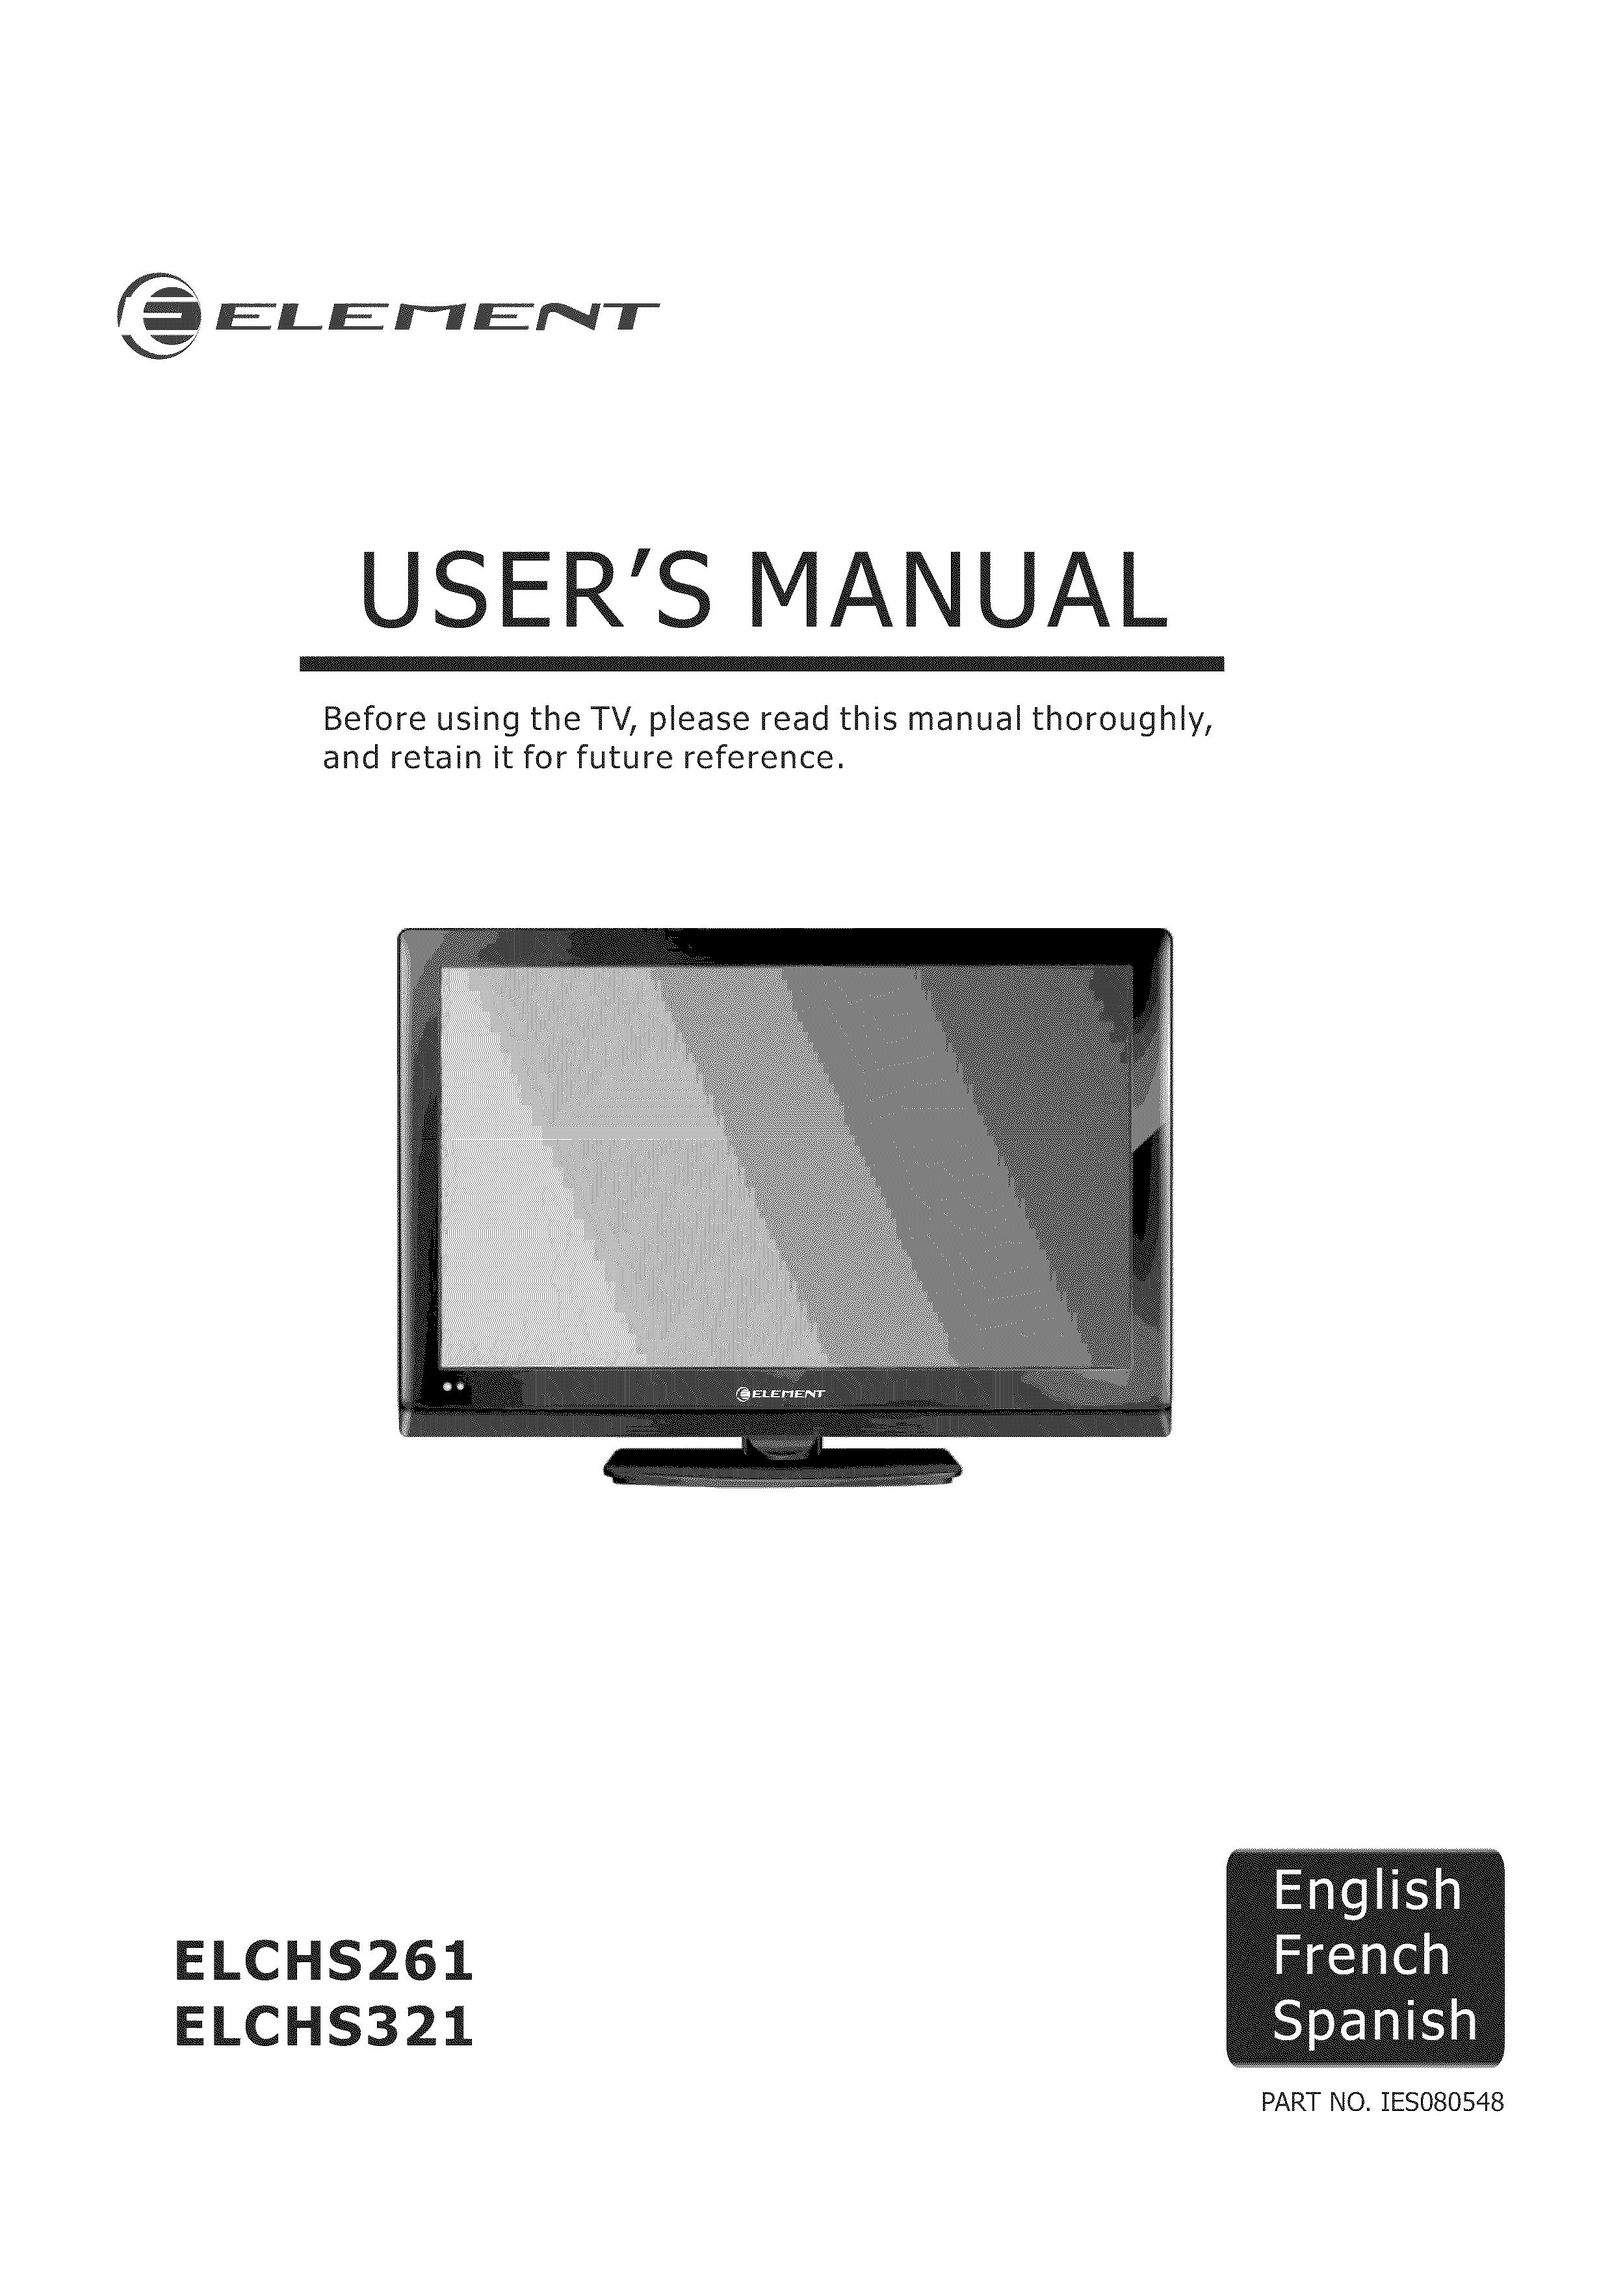 Element Electronics ELCHS261 Flat Panel Television User Manual